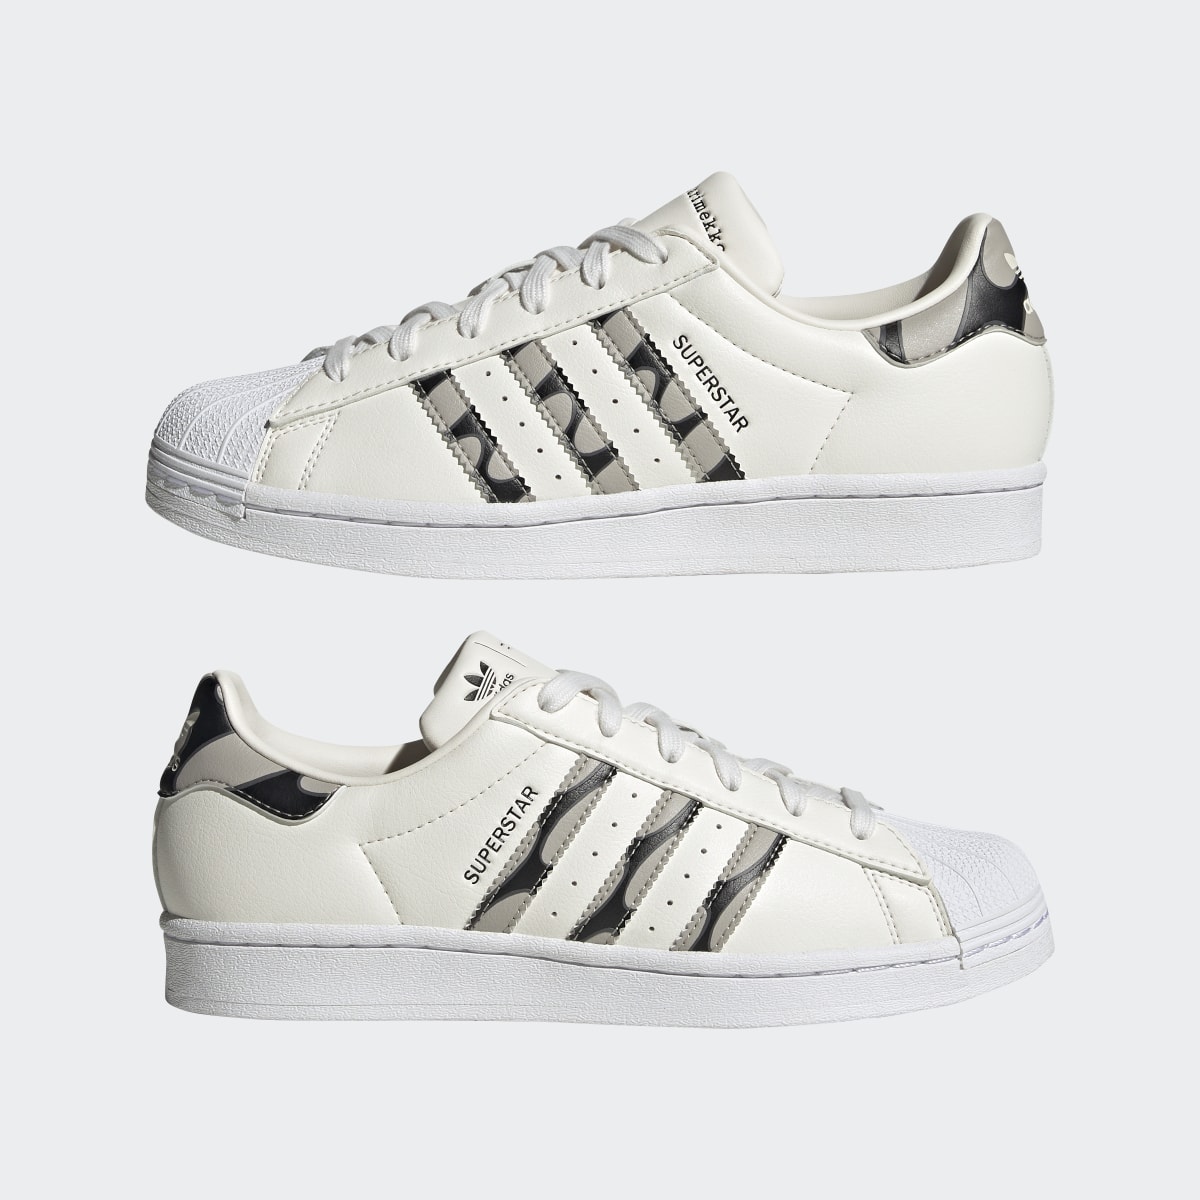 Adidas x Marimekko Superstar Schuh. 9